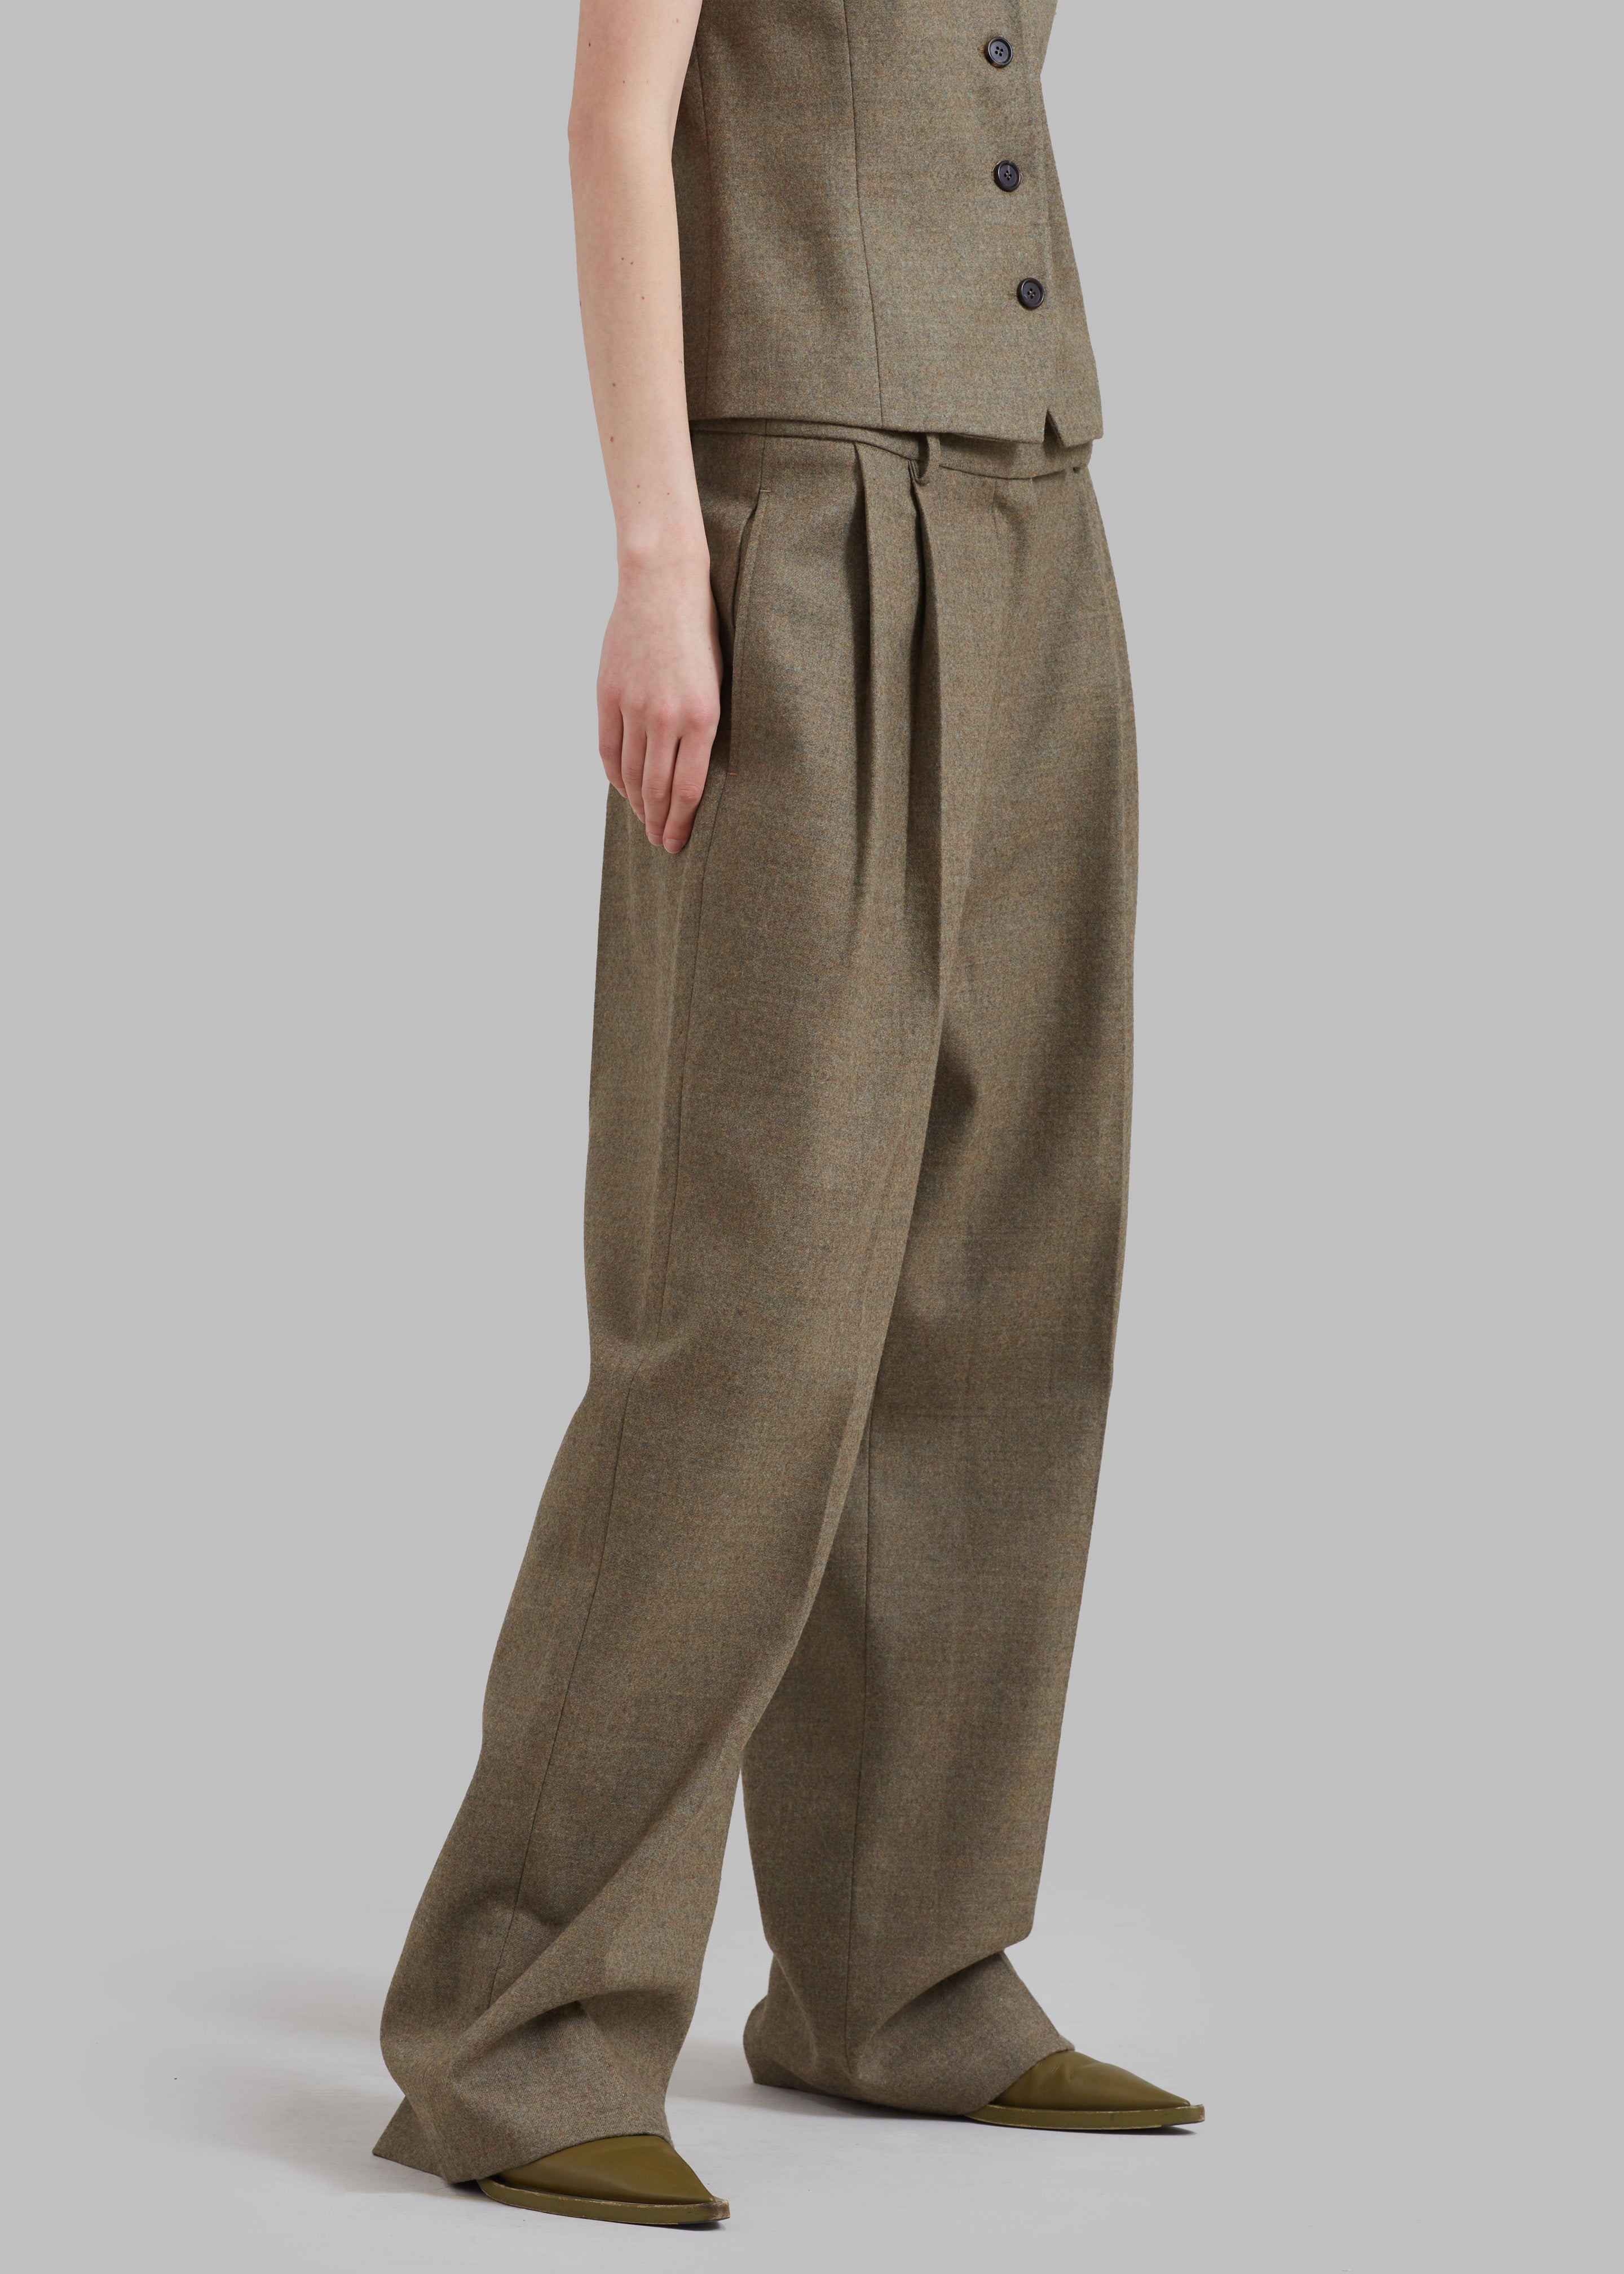 Wool Pants Women, Pleated Pants, Baggy Pants -  New Zealand